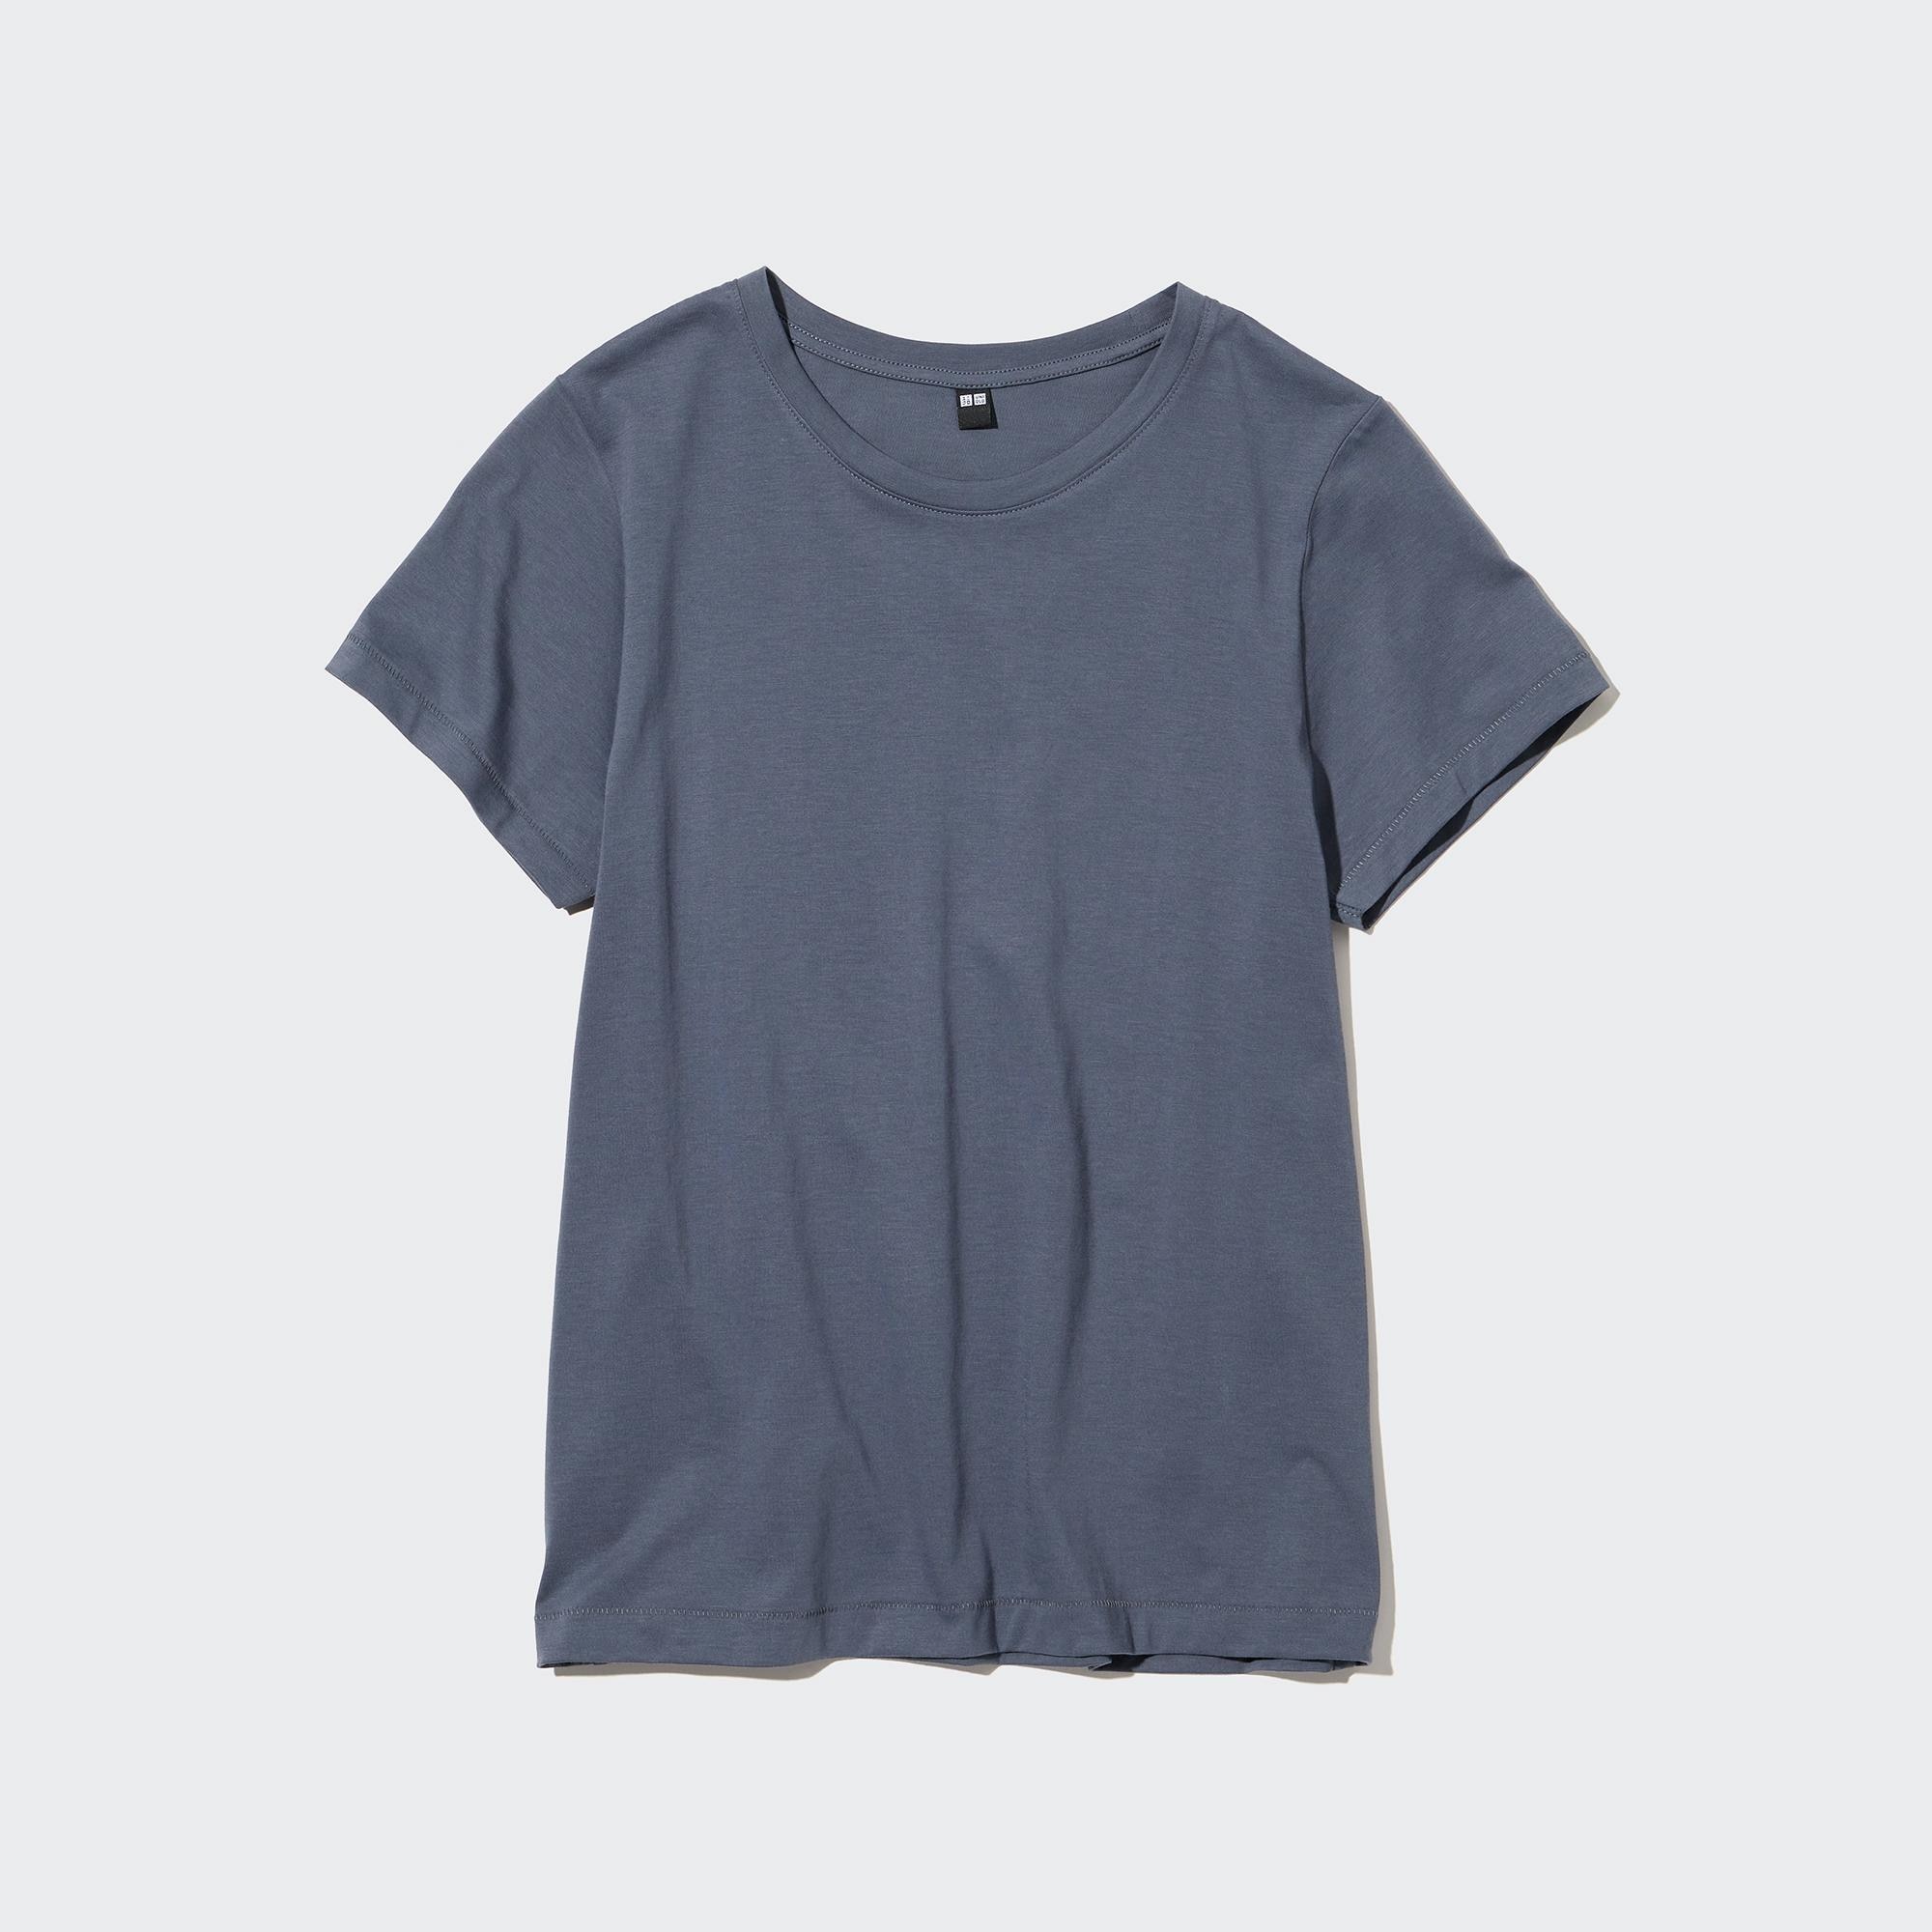 NWT Uniqlo Supima Cotton Green Cotton Crew Neck Short Sleeve T Shirt S   eBay